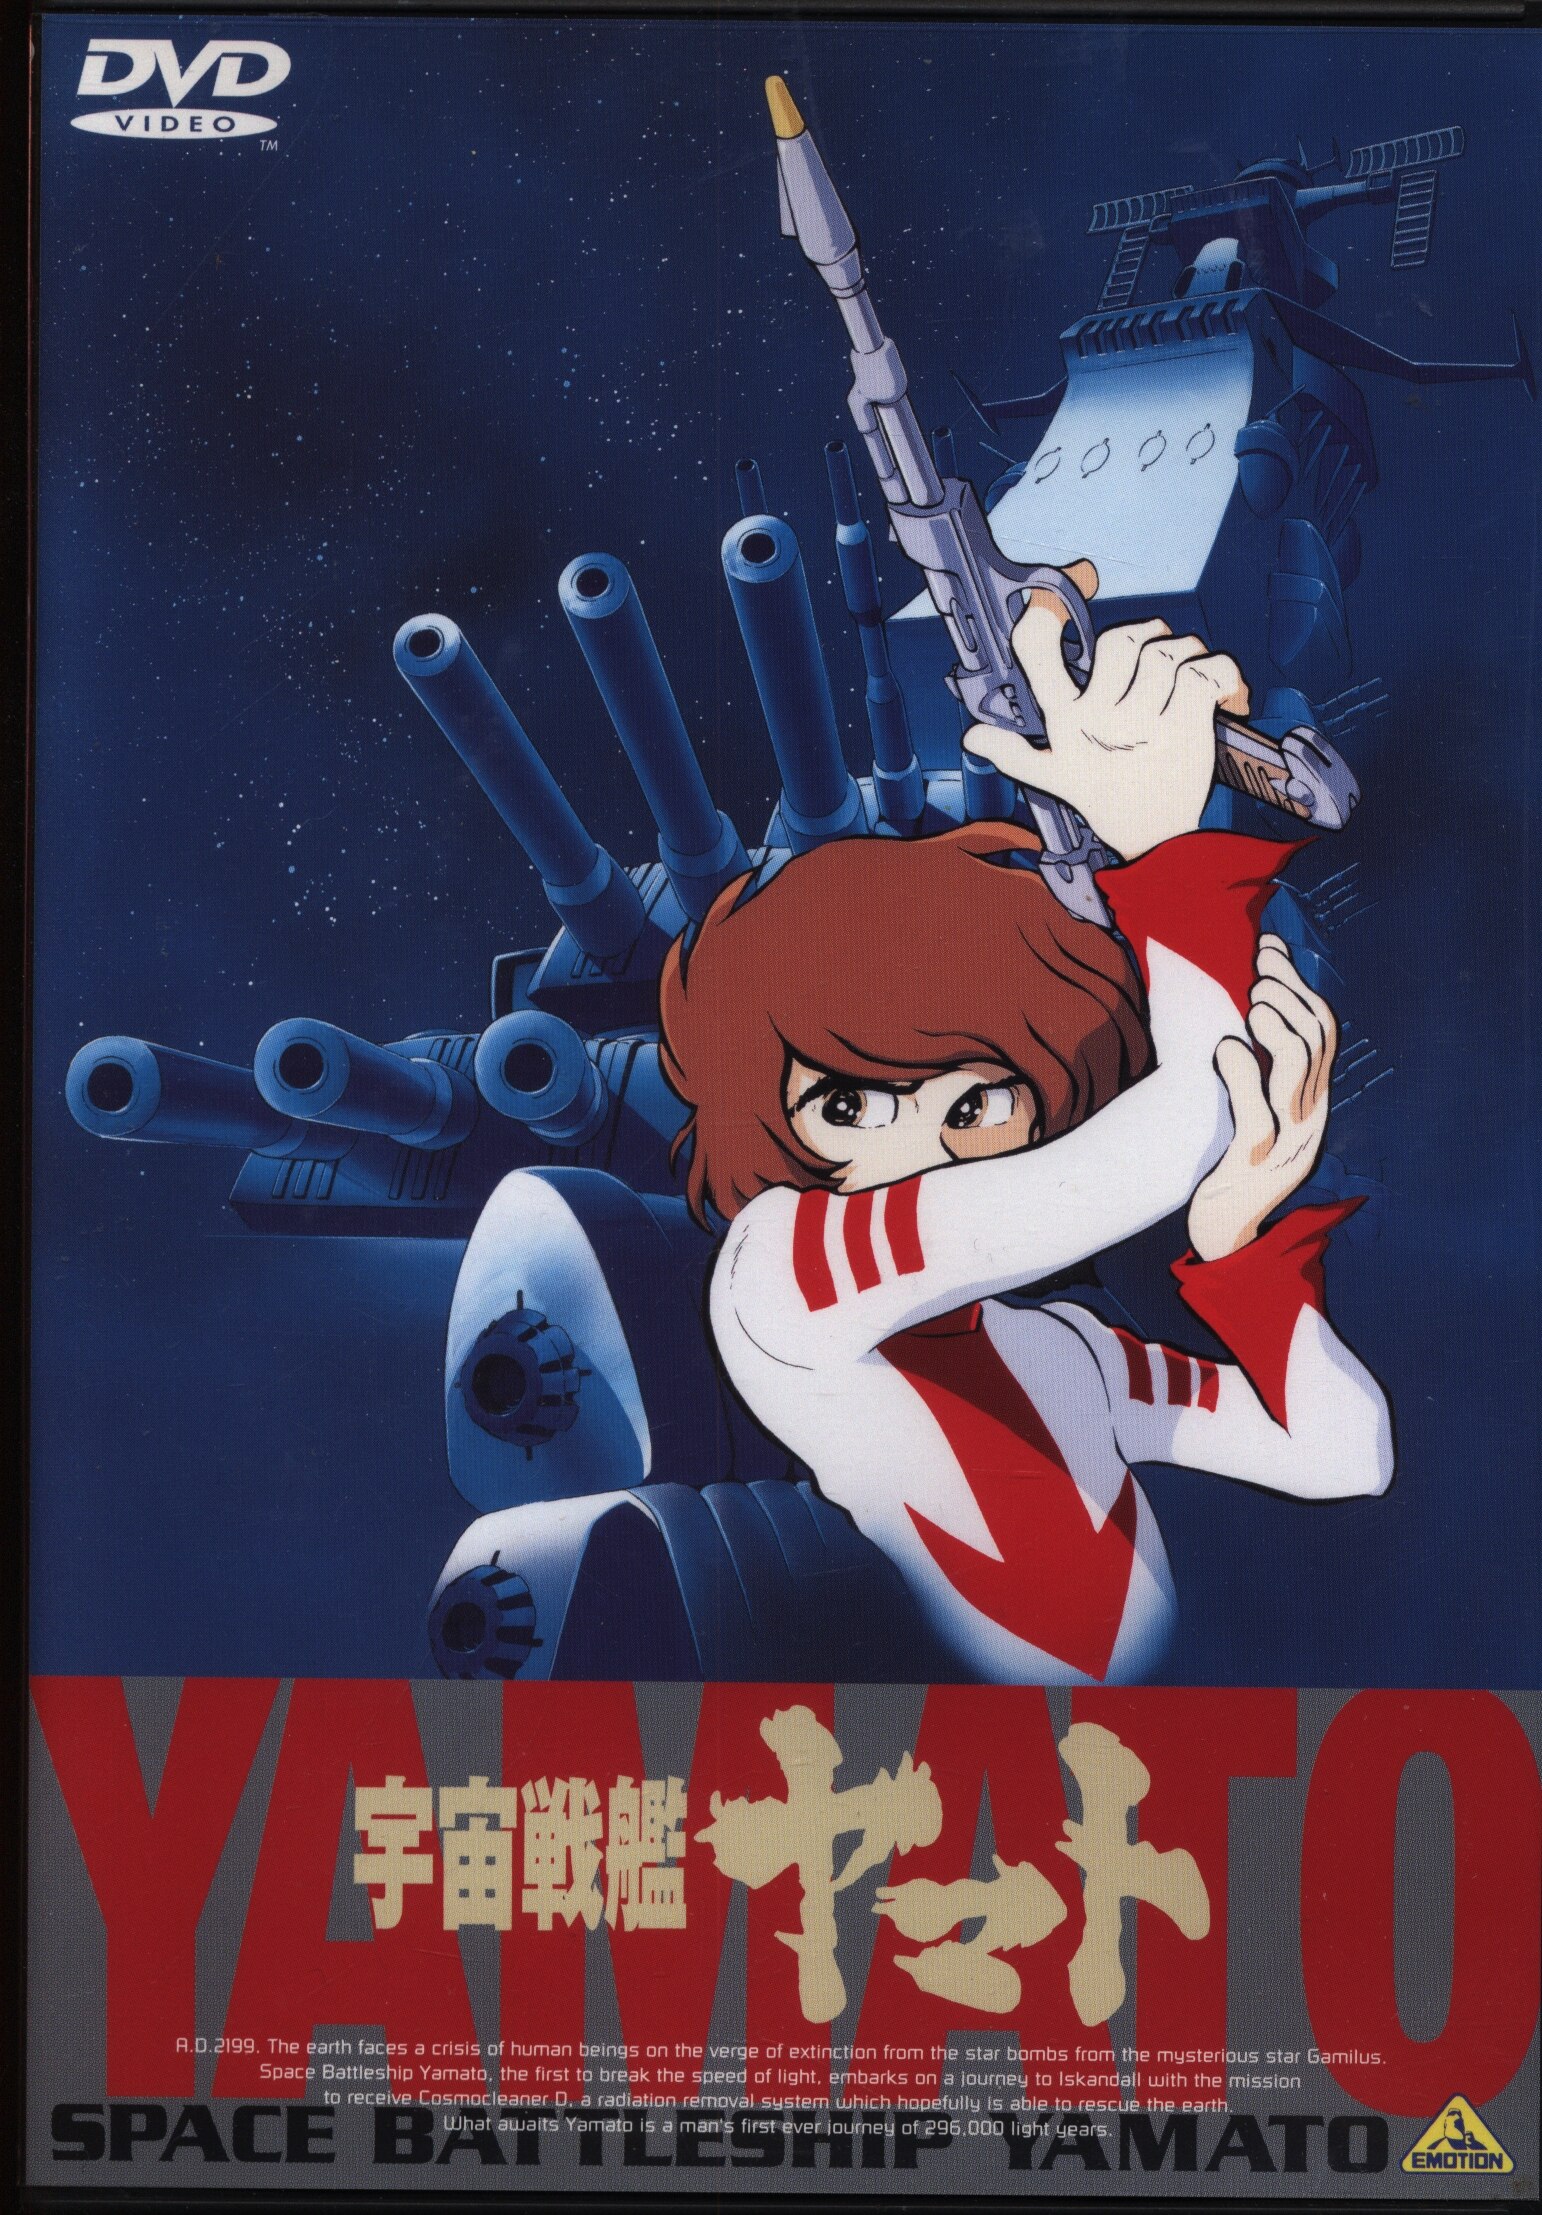 Space Battleship Yamato 2199 Extended Trailer  Color Me Excited   AstroNerdBoys Anime  Manga Blog  AstroNerdBoys Anime  Manga Blog